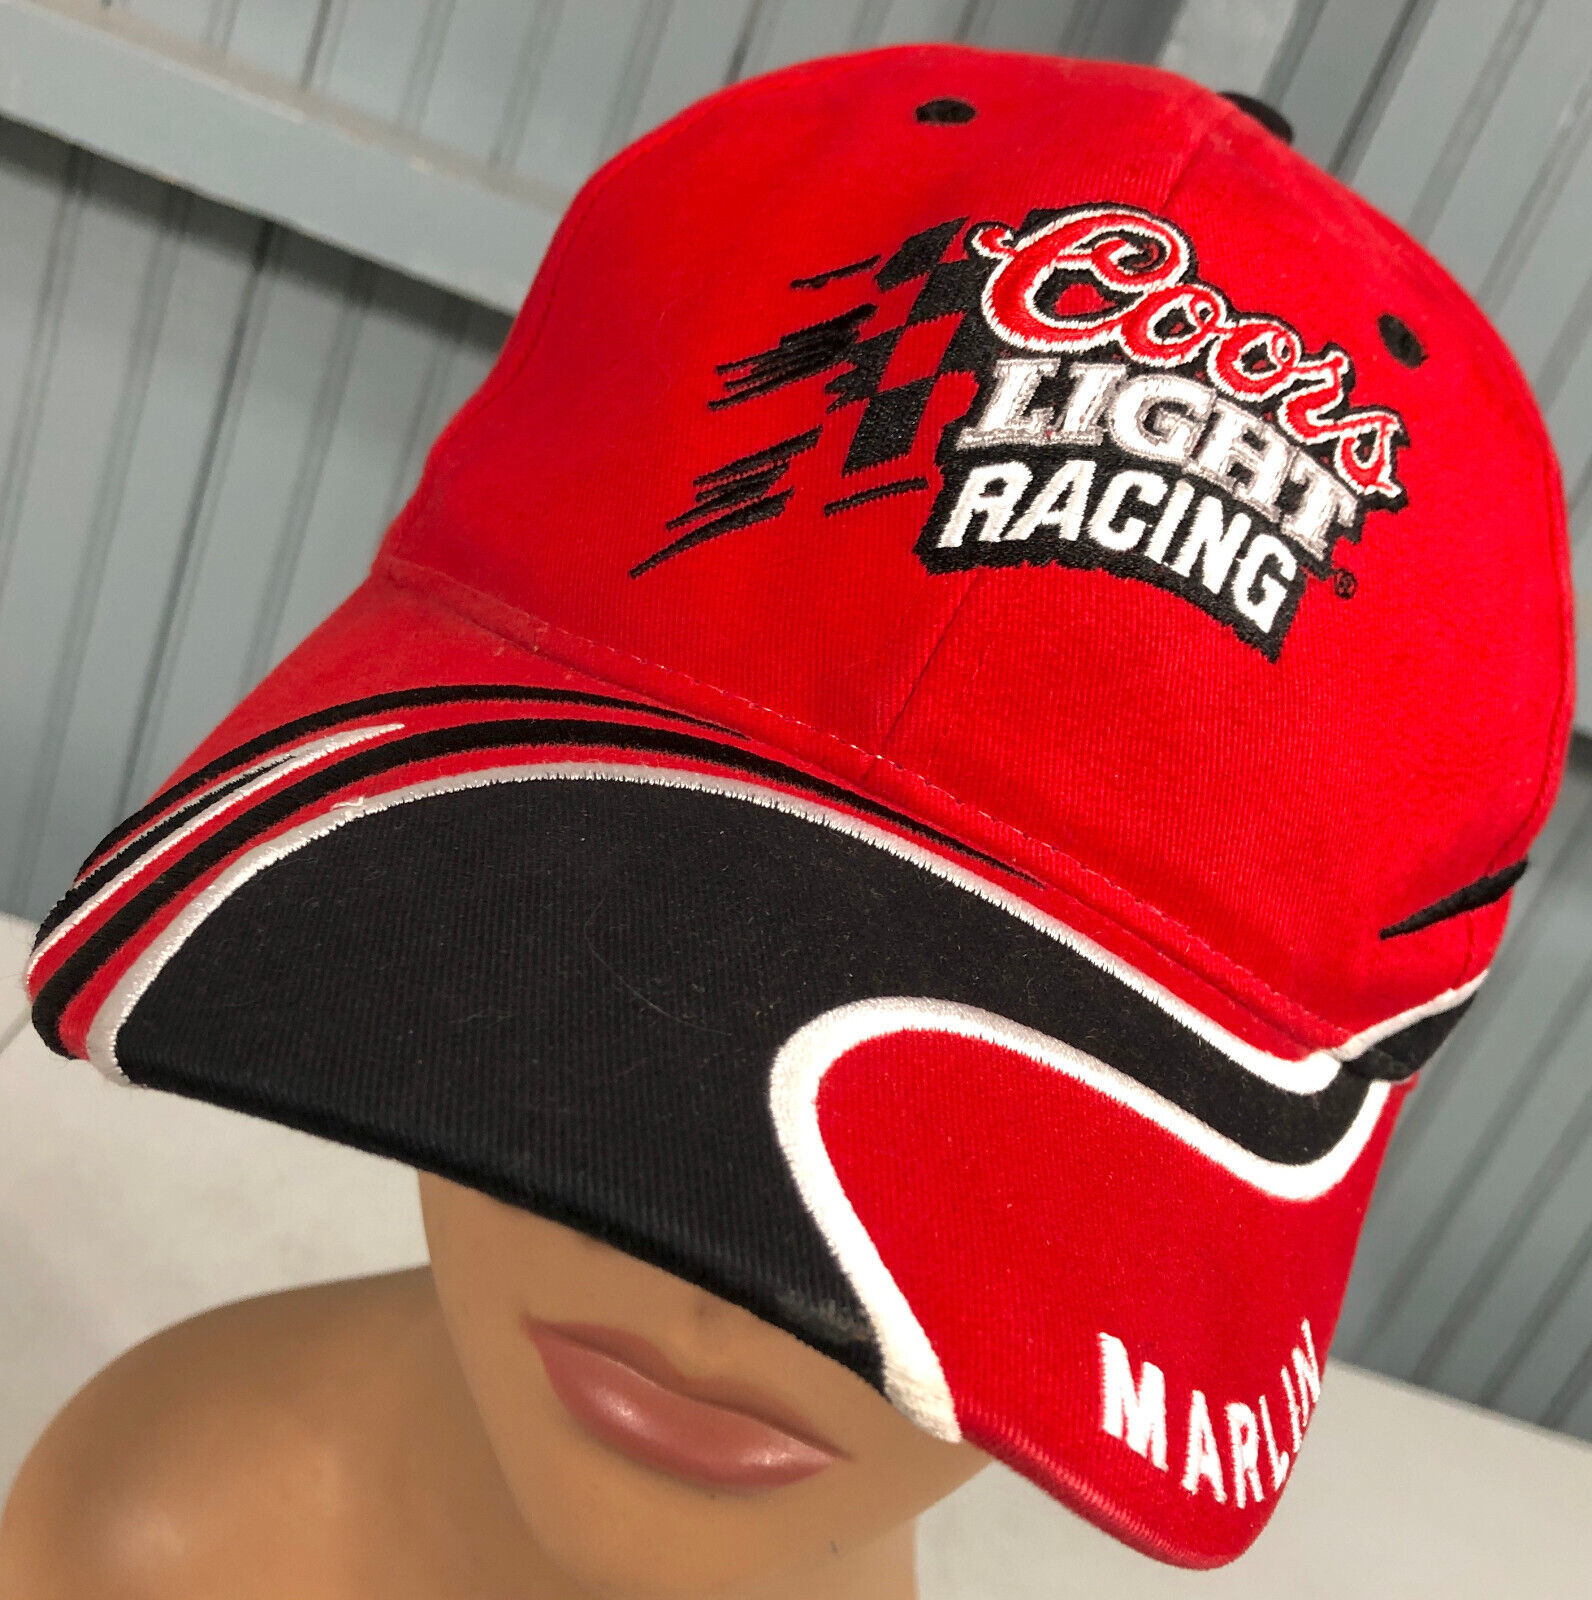 Primary image for Coors Light Racing Nascar Marlin #40 Adjustable Baseball Hat Cap